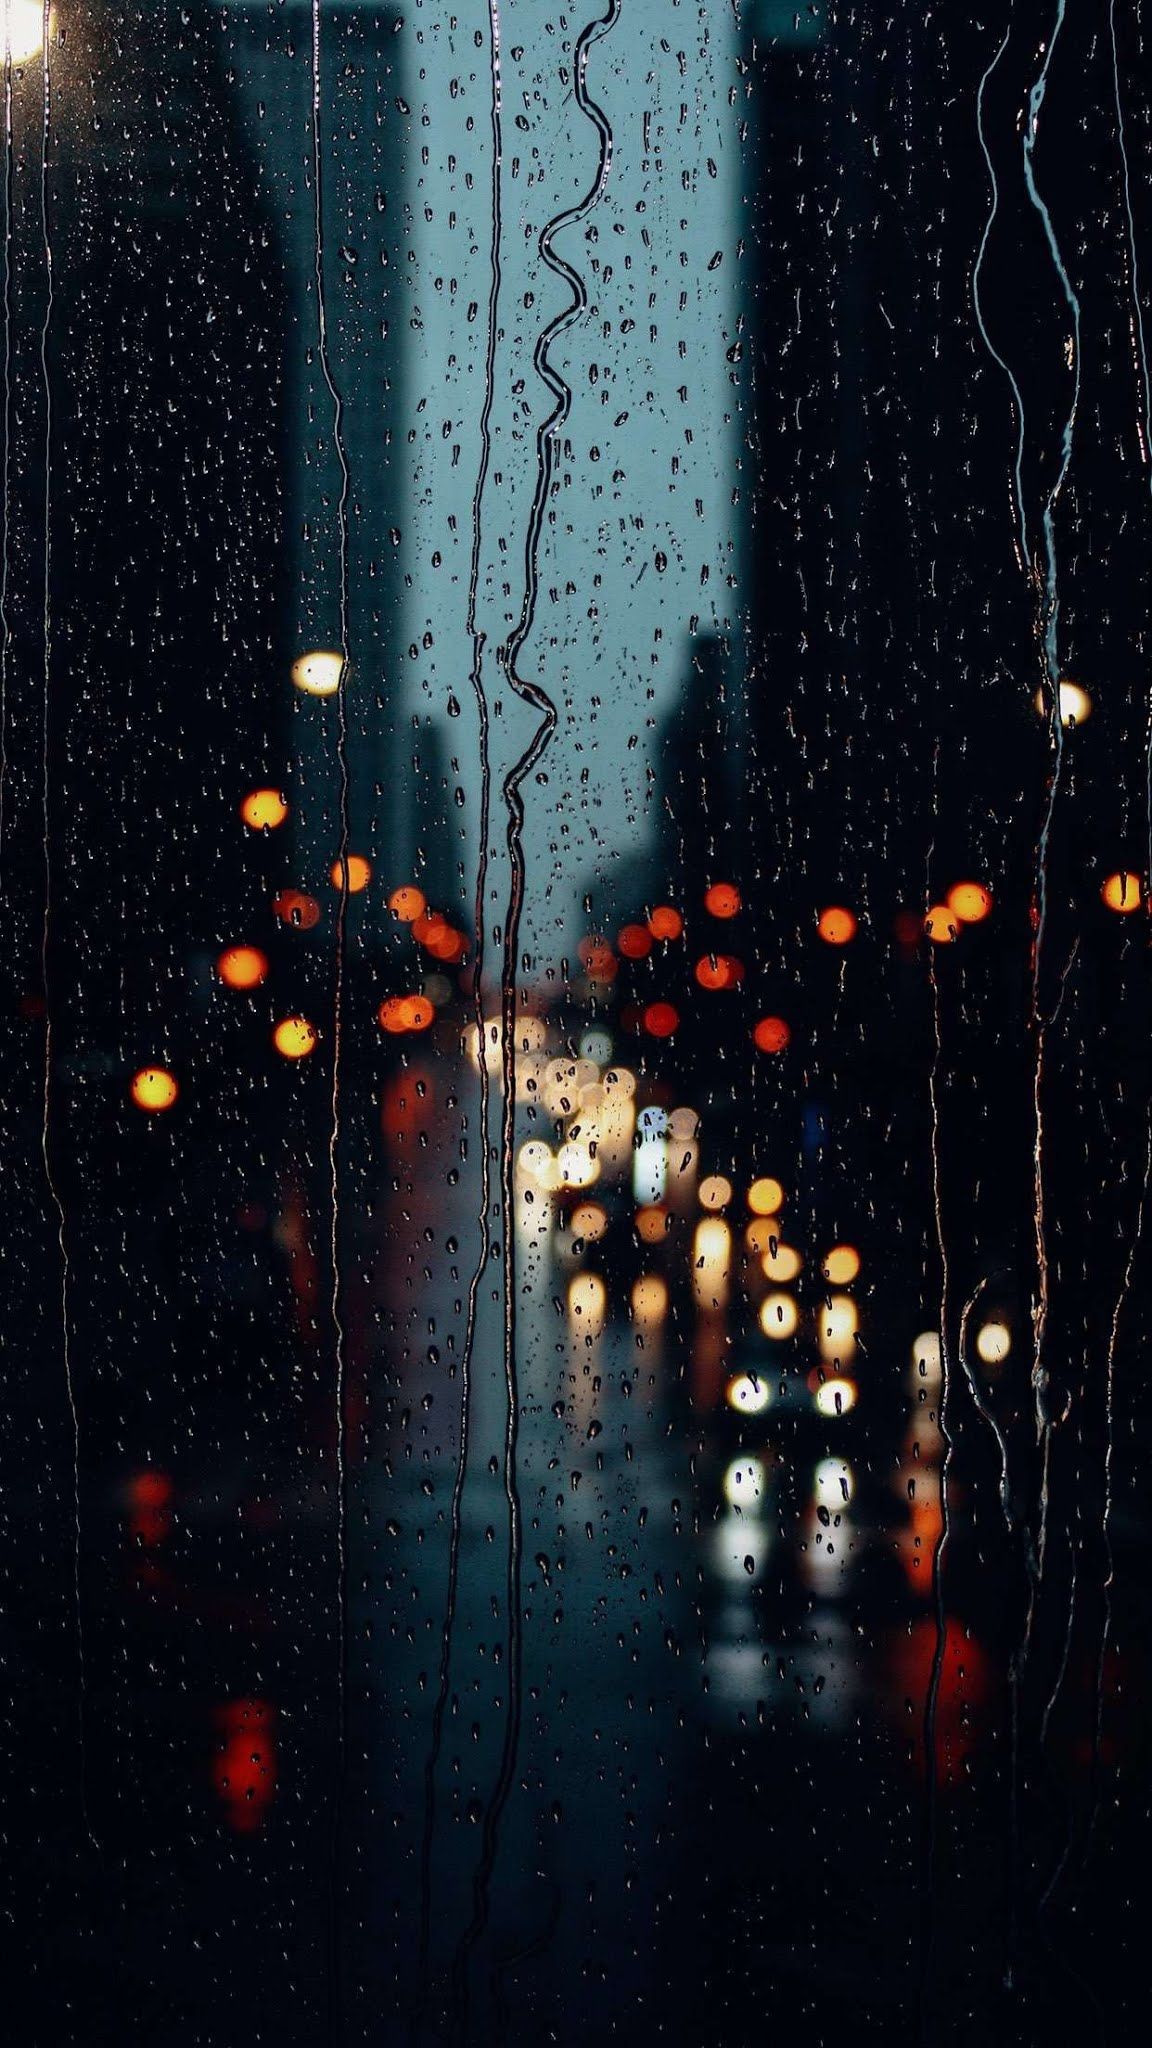 Rain drops on window glass mobile wallpaper Mobile Walls